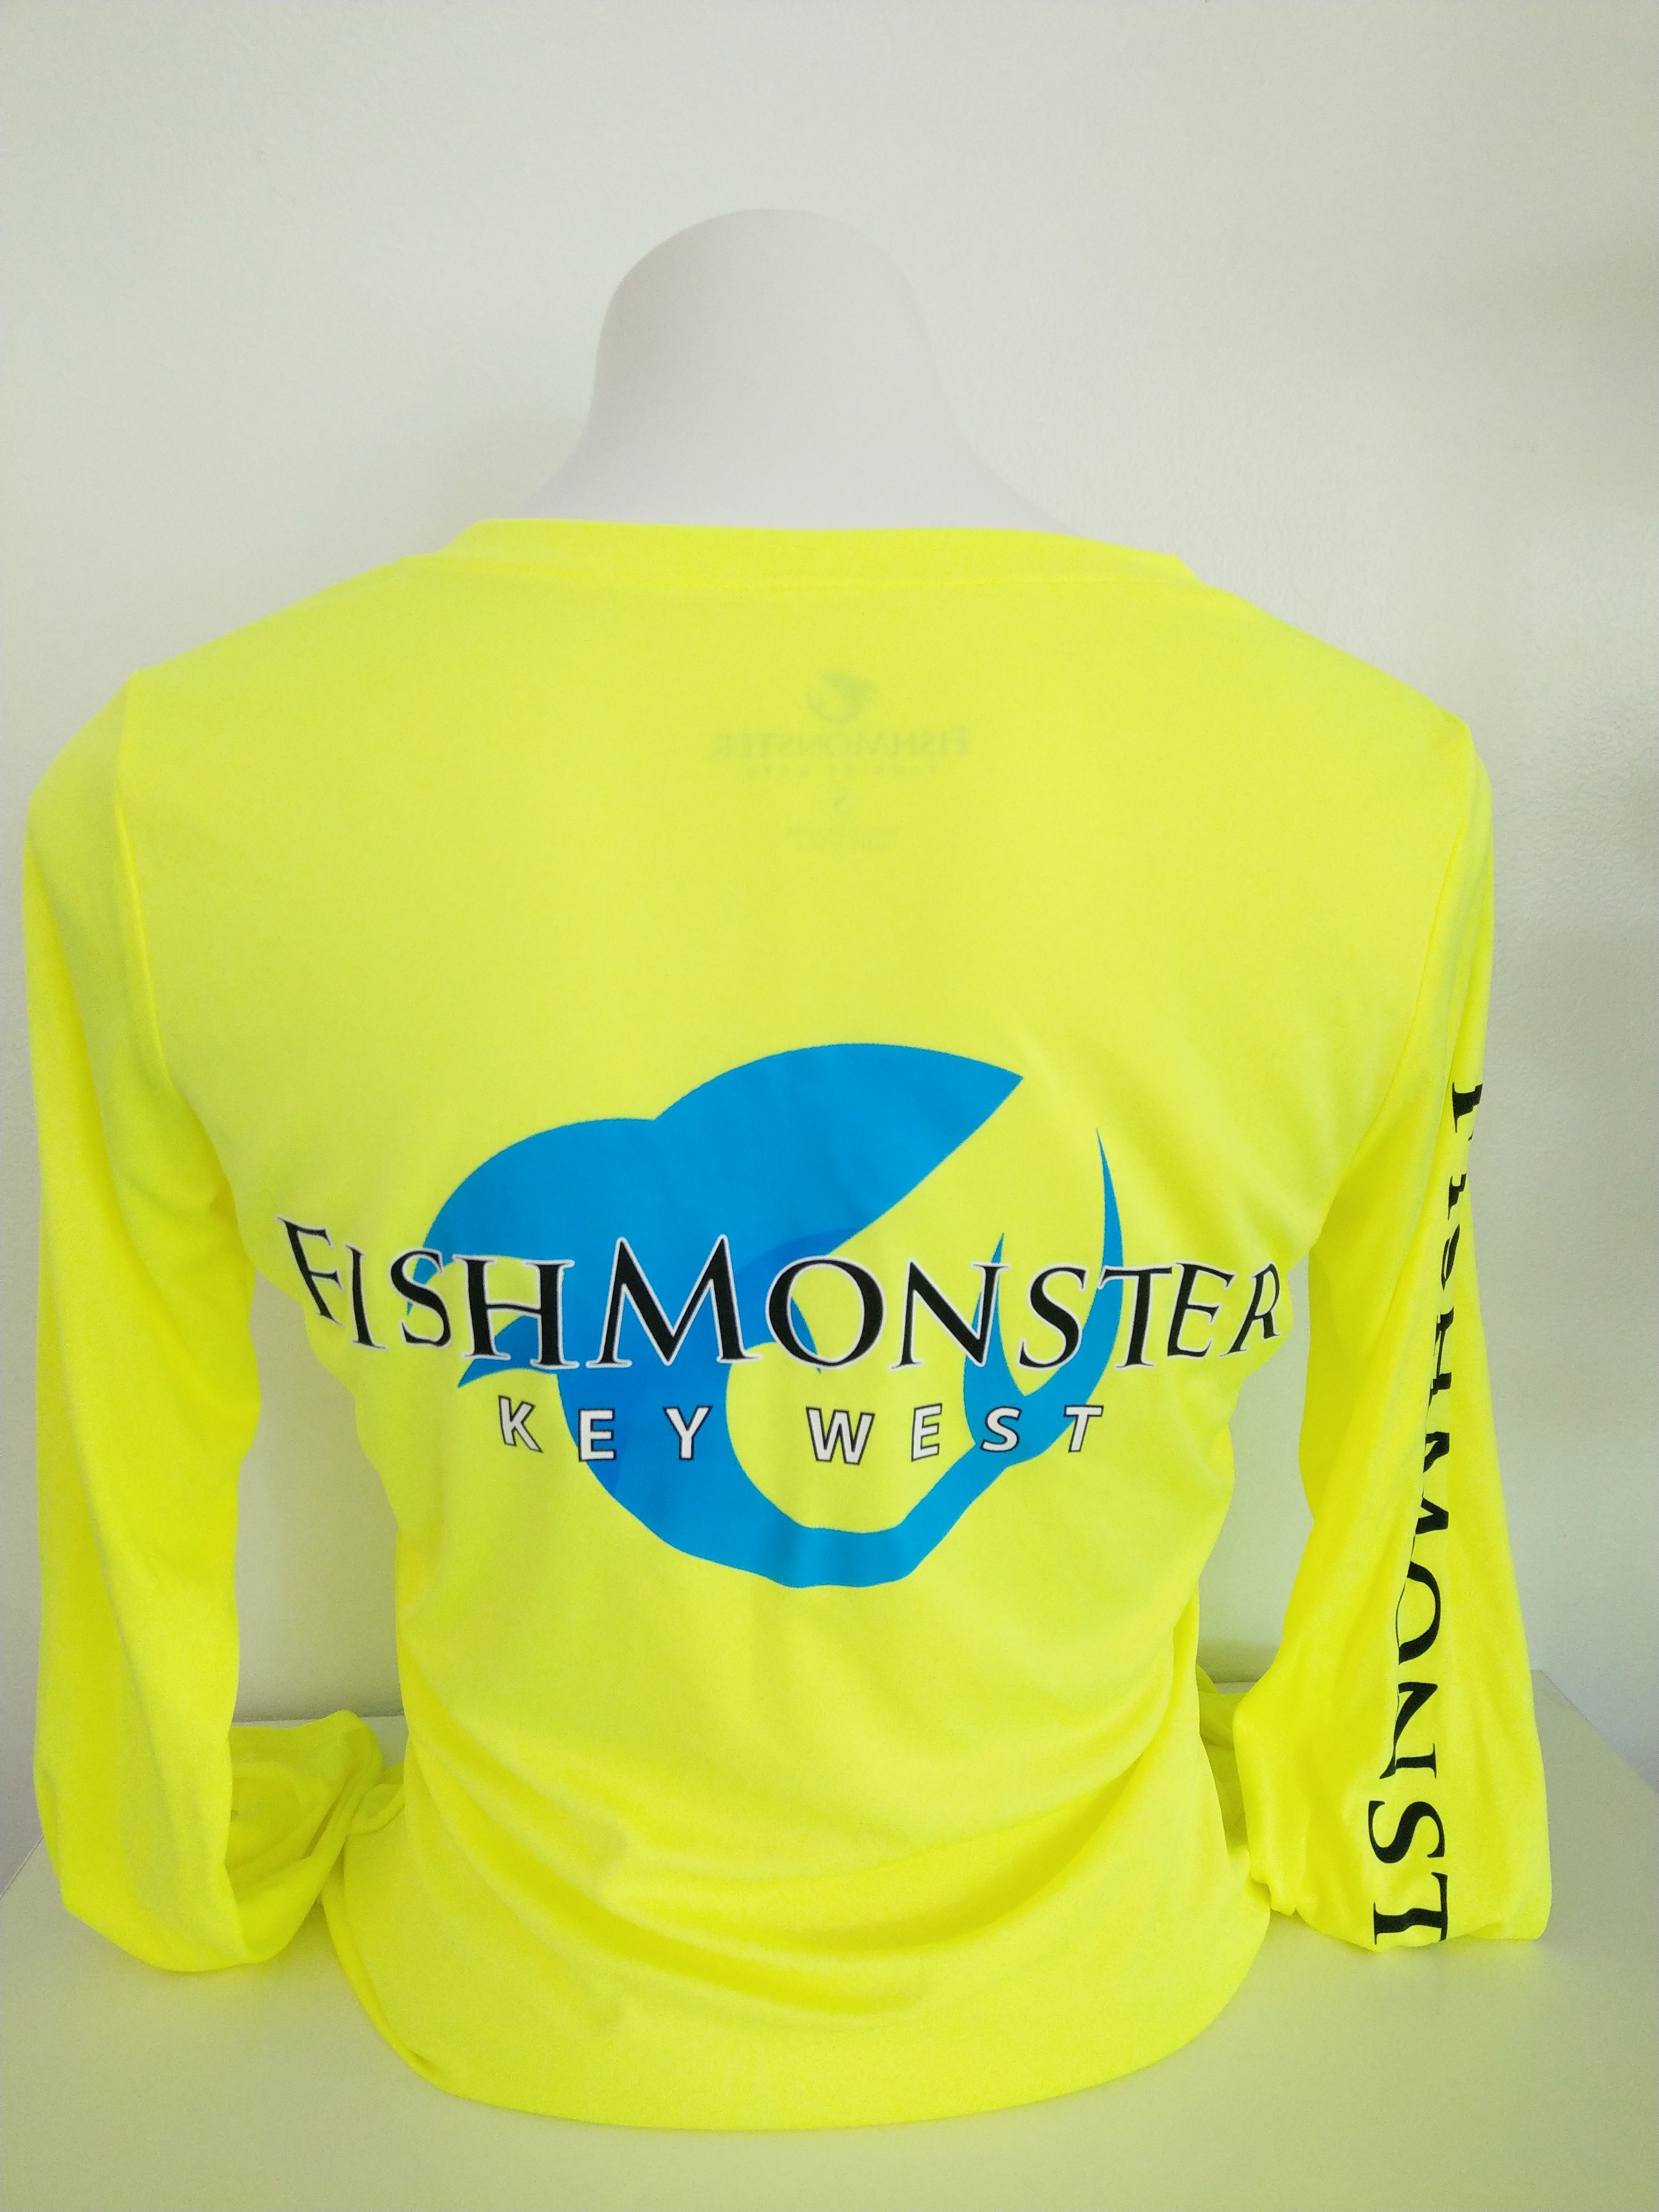 Women's FishMonster Long Sleeve Performance Fishing Shirt